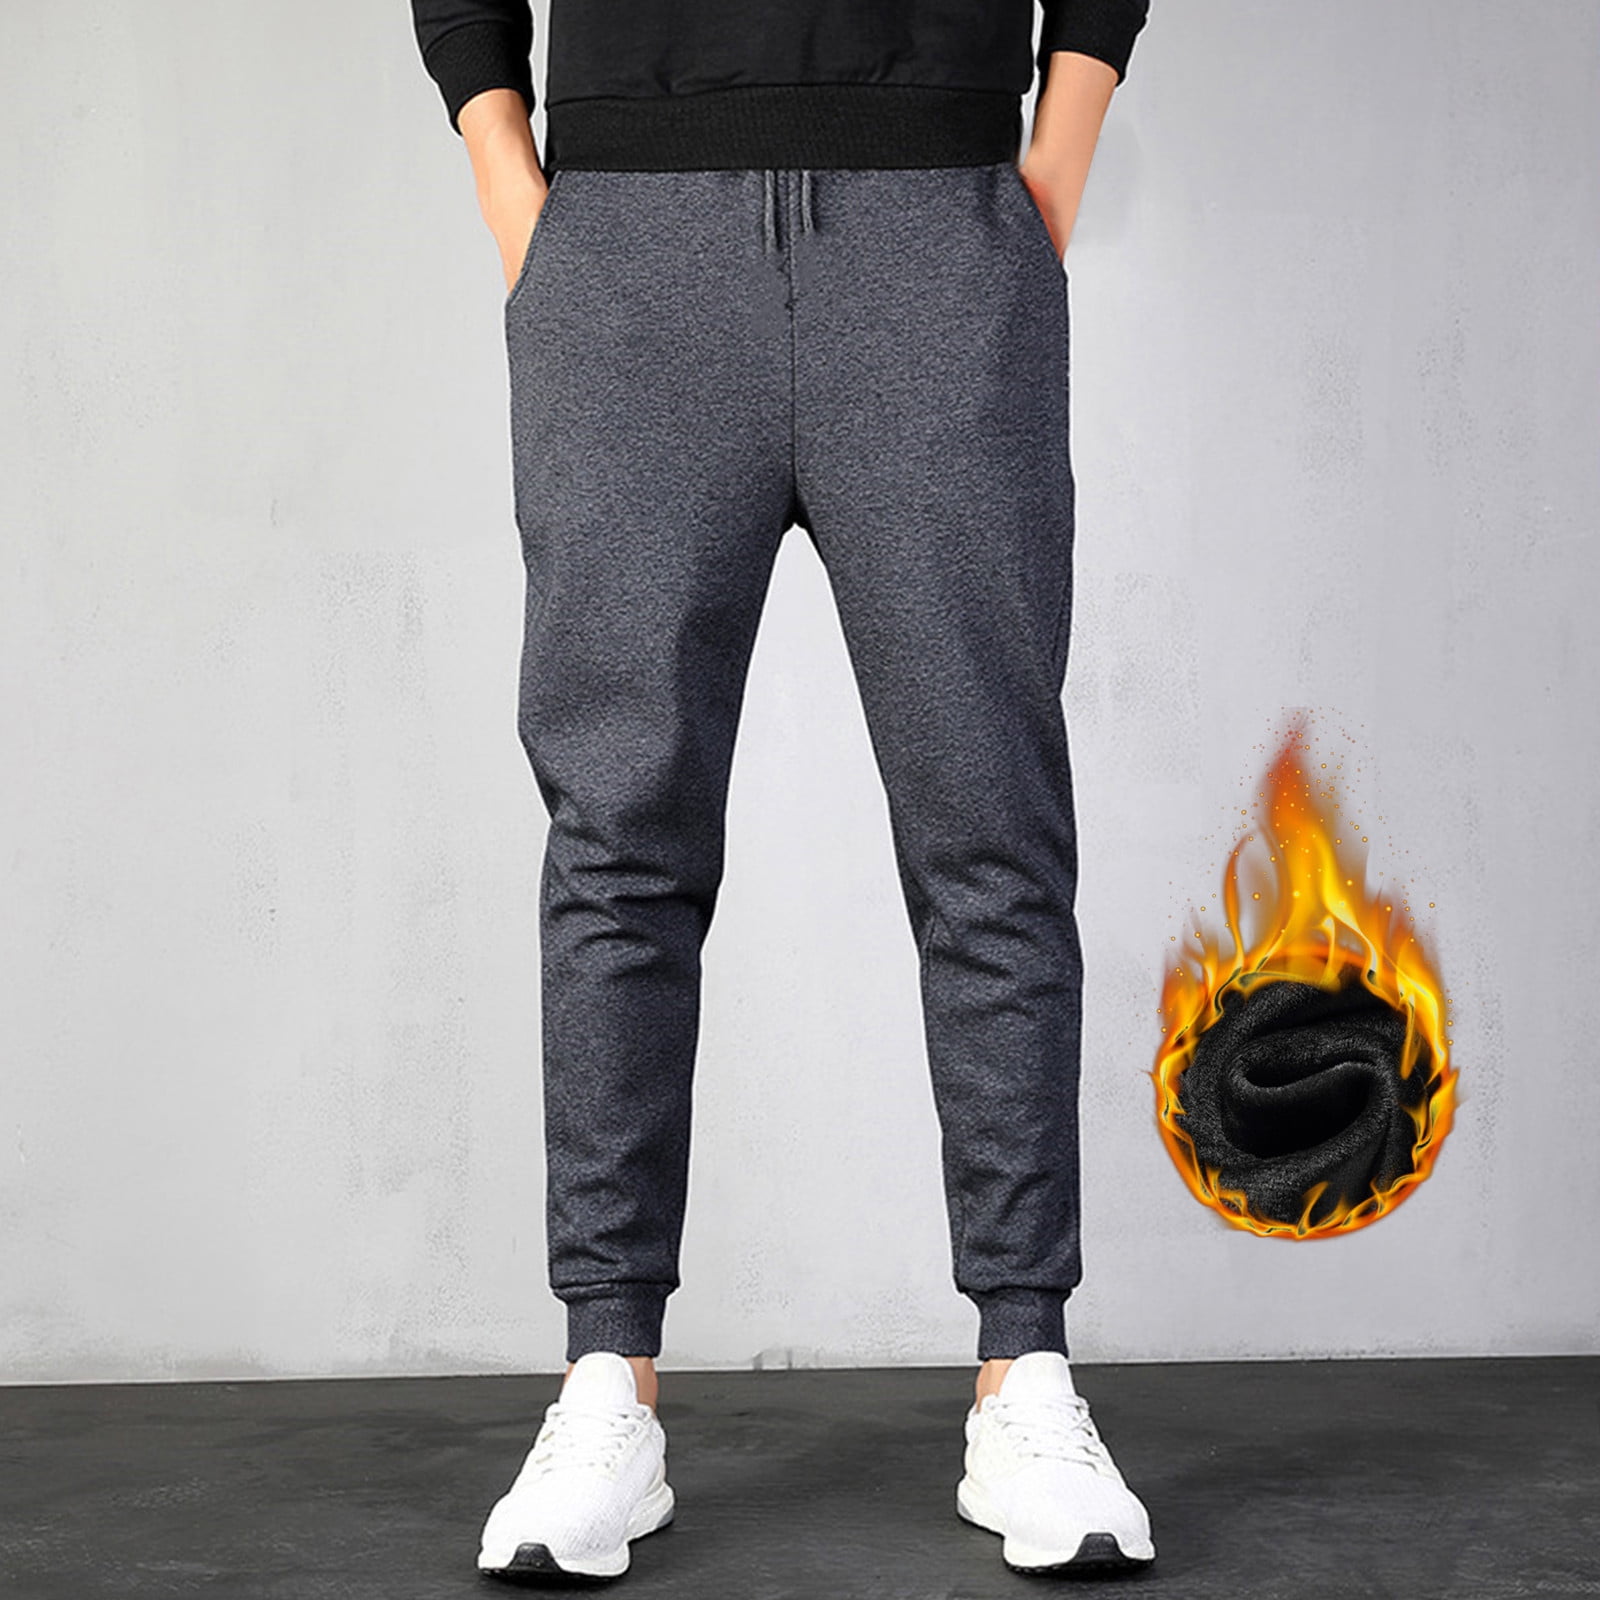 WUWUQF Men's Pants Casual Warm Solid Full Length Leggings Plush Pocket ...